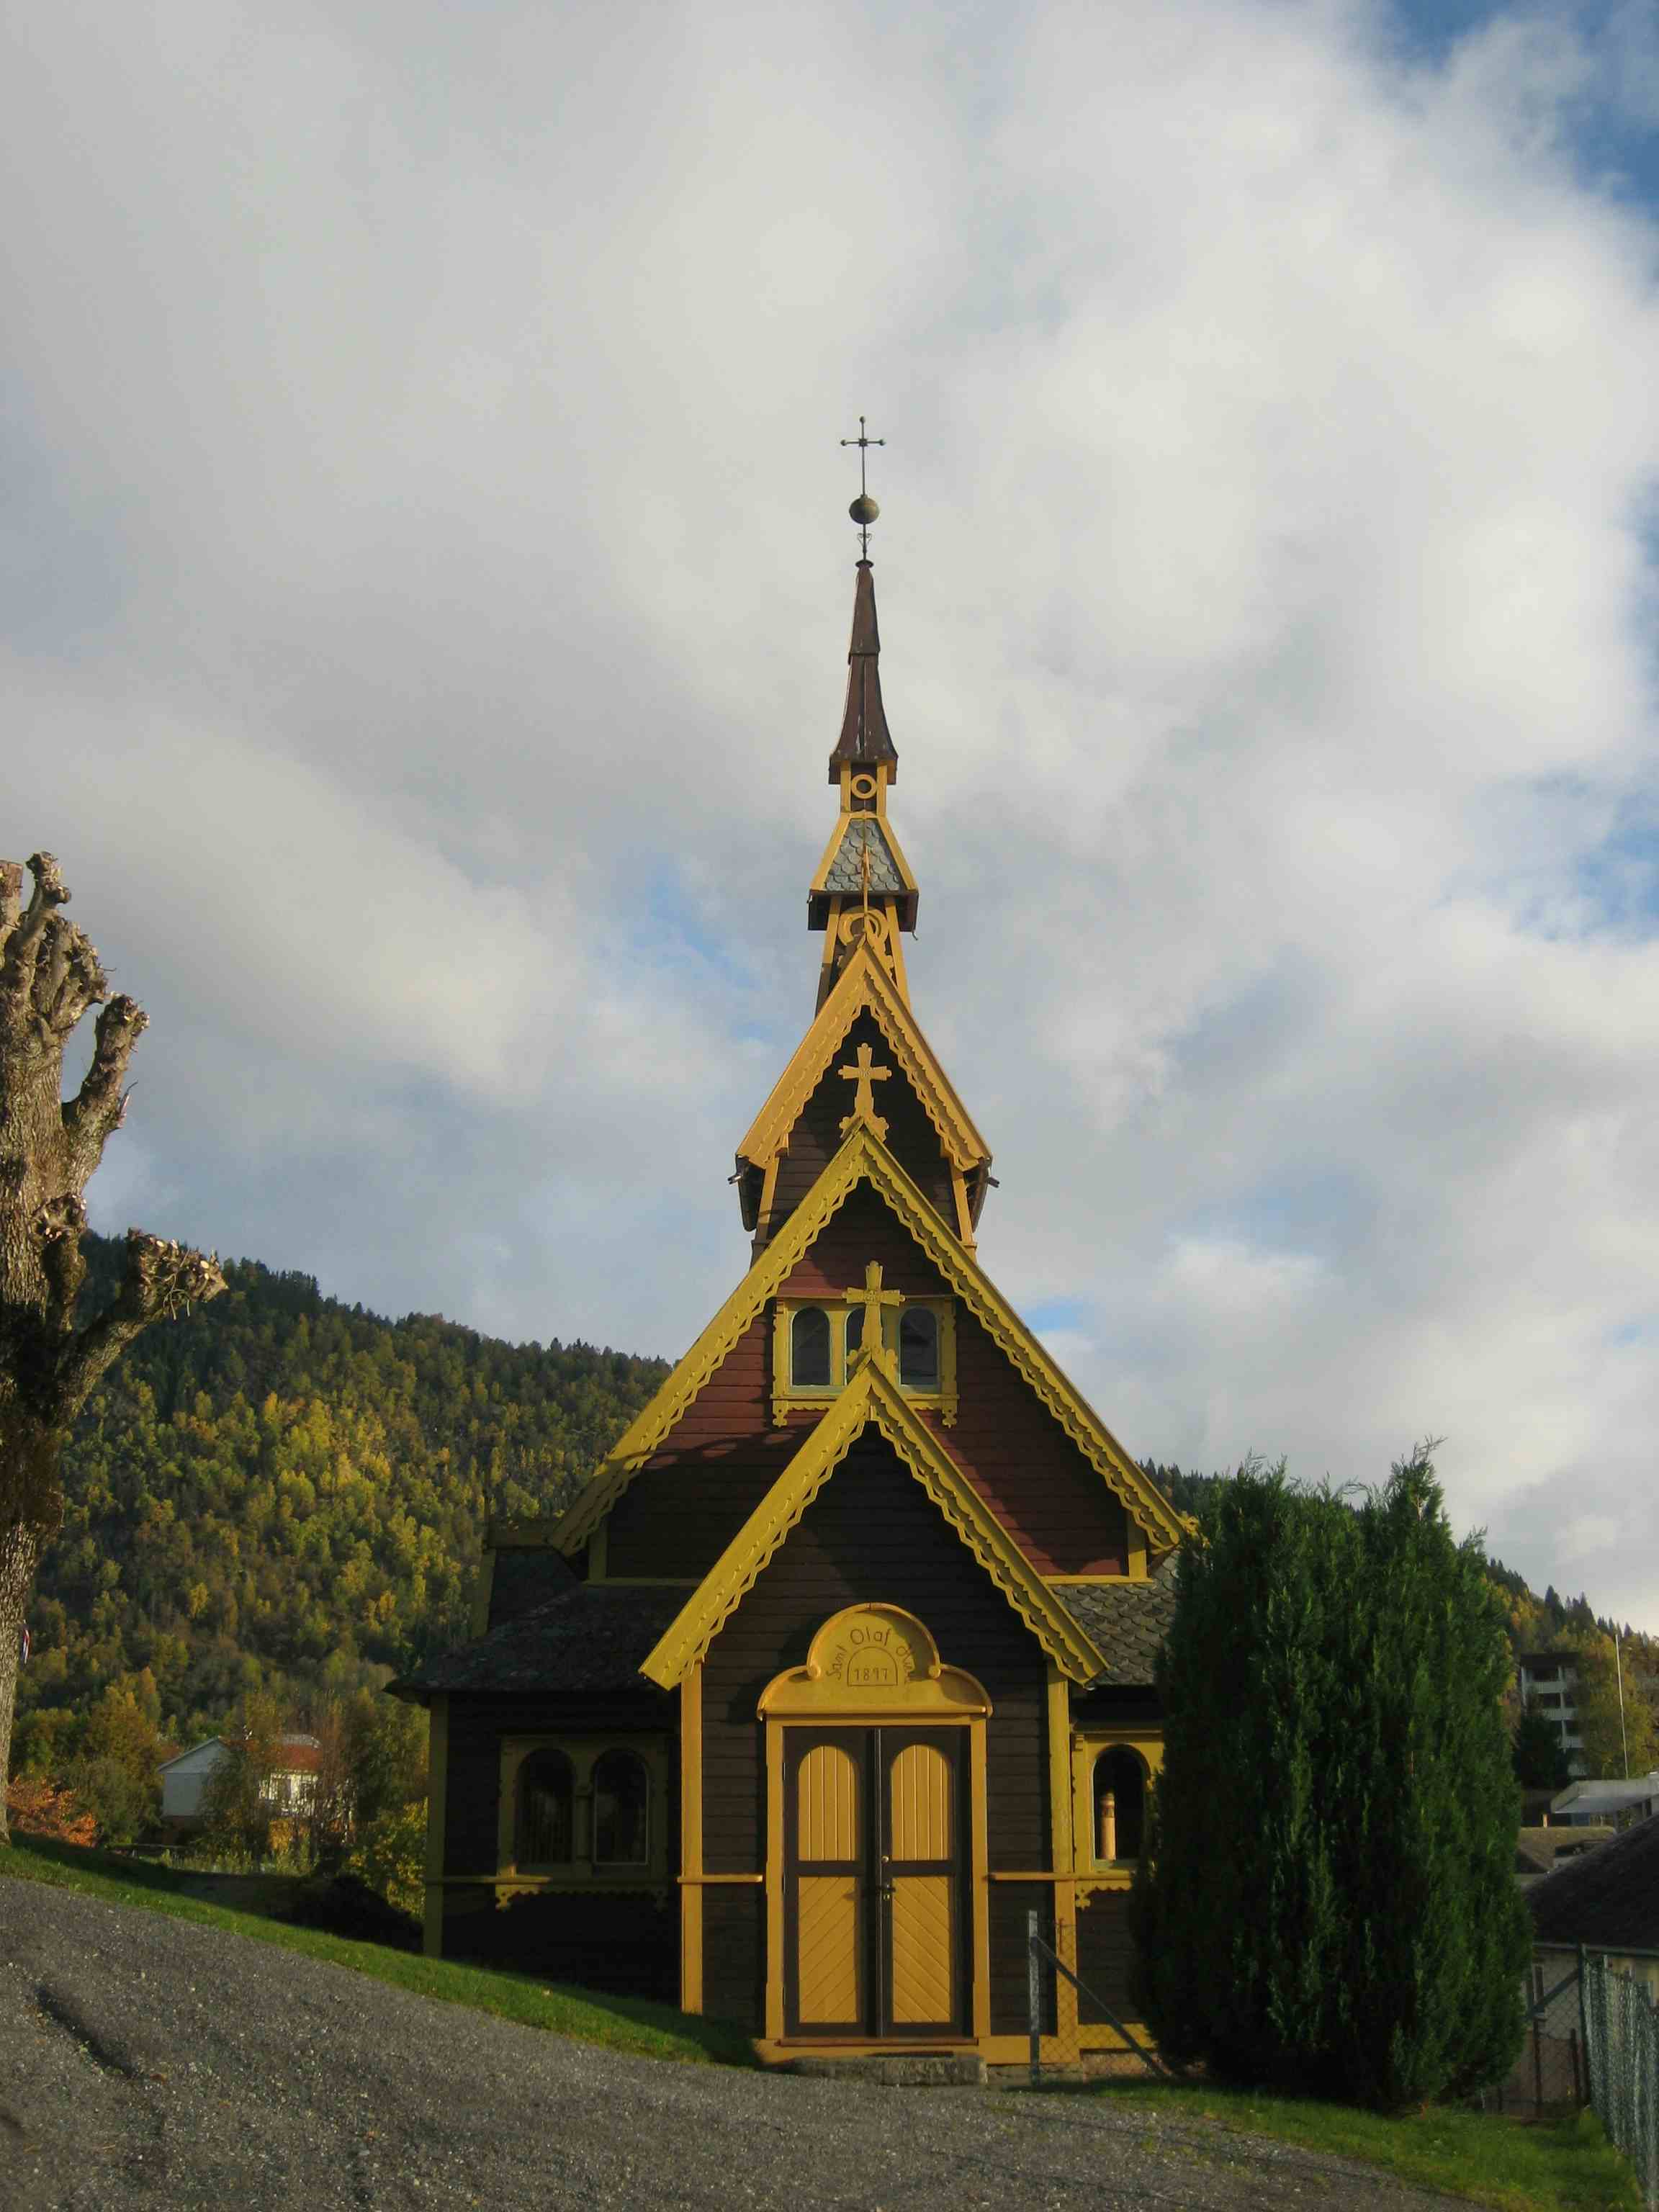 St. Olaf's Church - The English Church